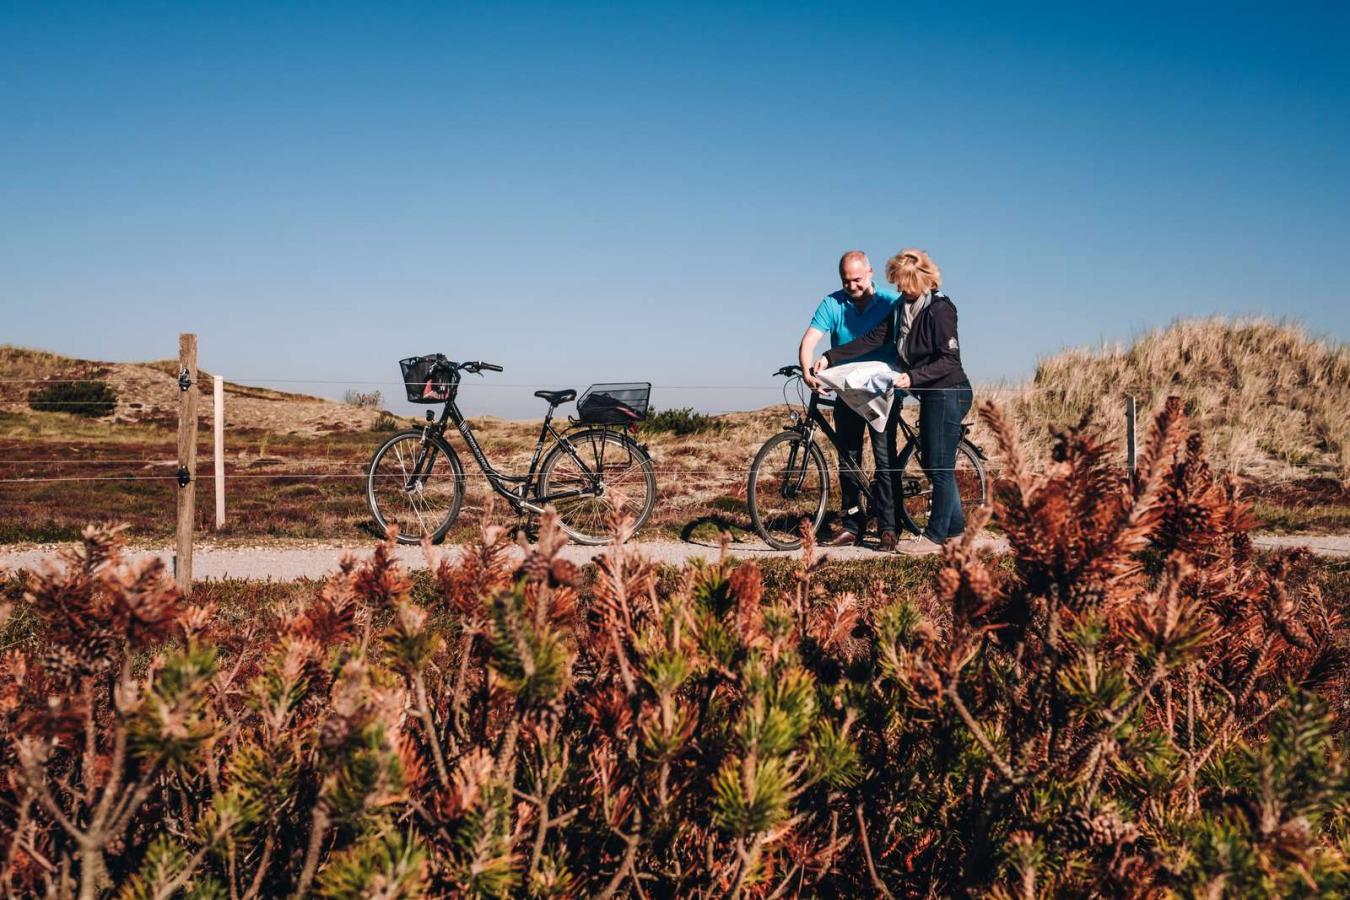 Overleve Bevise erfaring Fjorden rundt på cykel | Visitvesterhavet